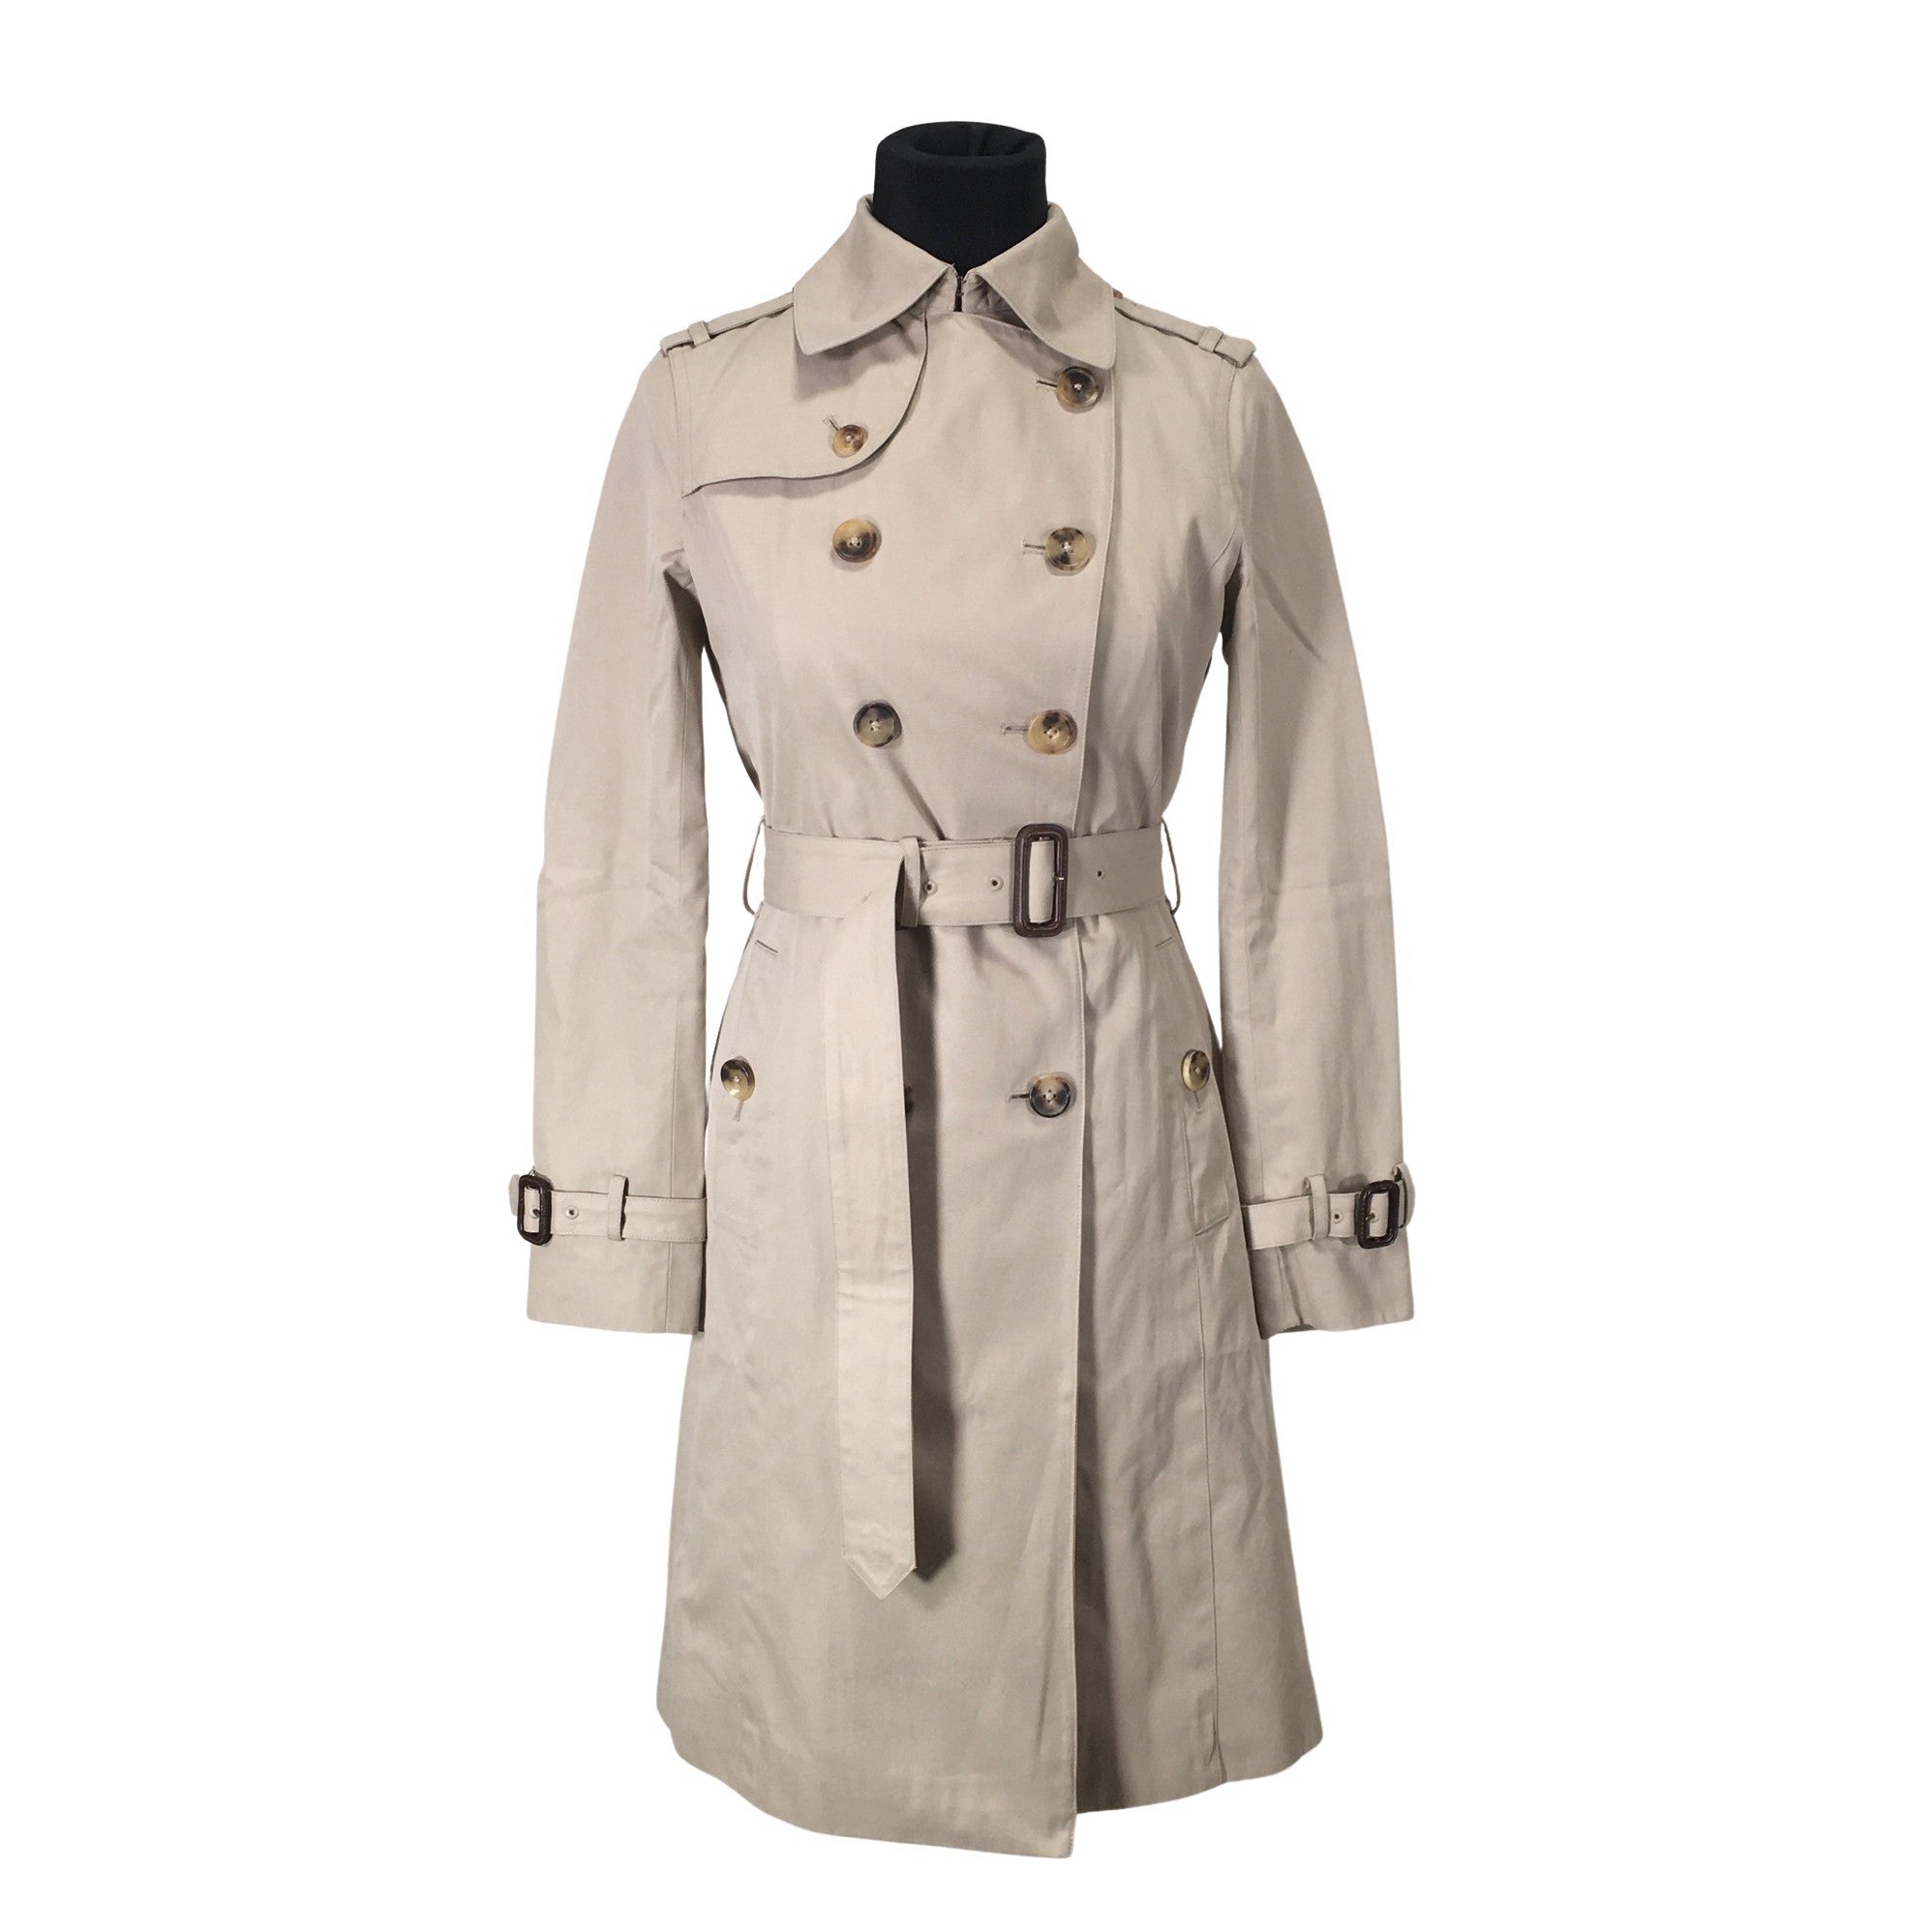 Sociologie Senator Sportschool Women's Brooks Brothers Trench coat, size 32 (Beige) | Emmy